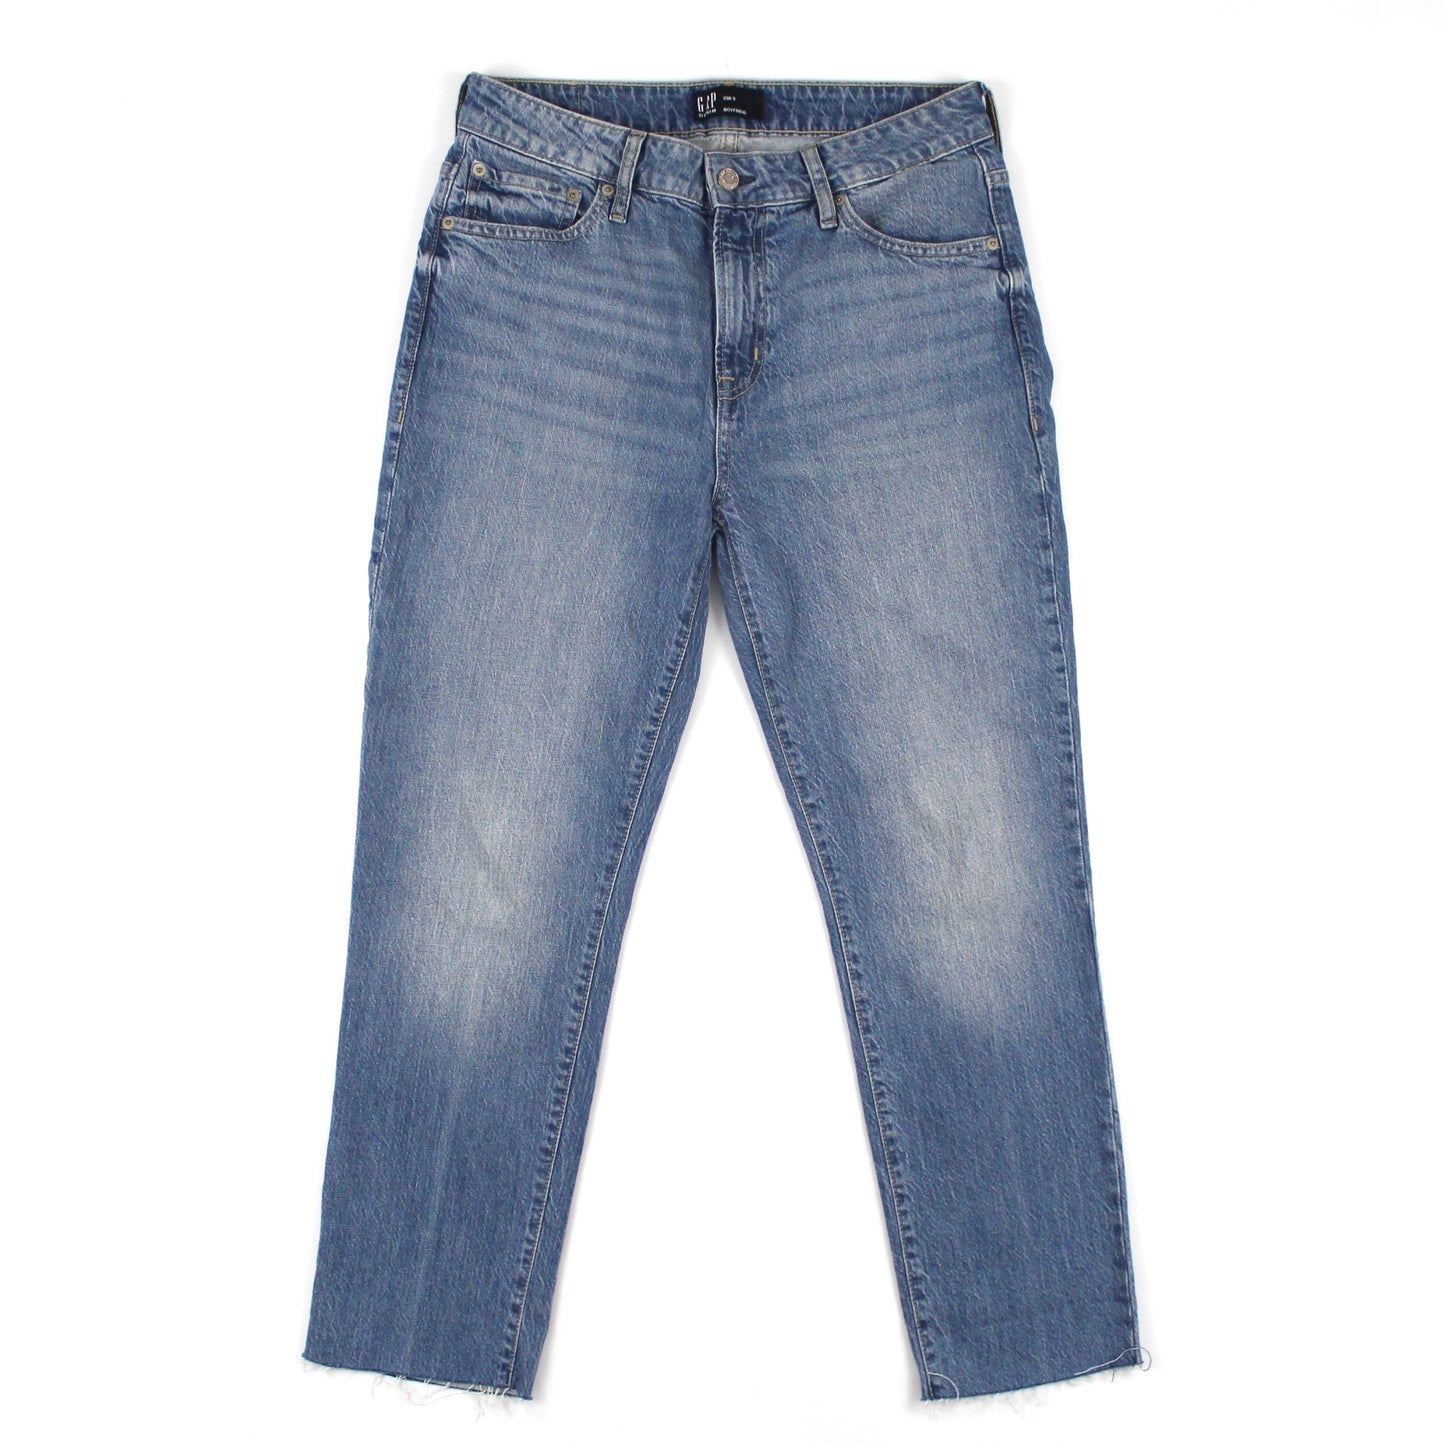 GAP Mid Rise Boyfriend Jeans, Light Wash Denim (29x27)